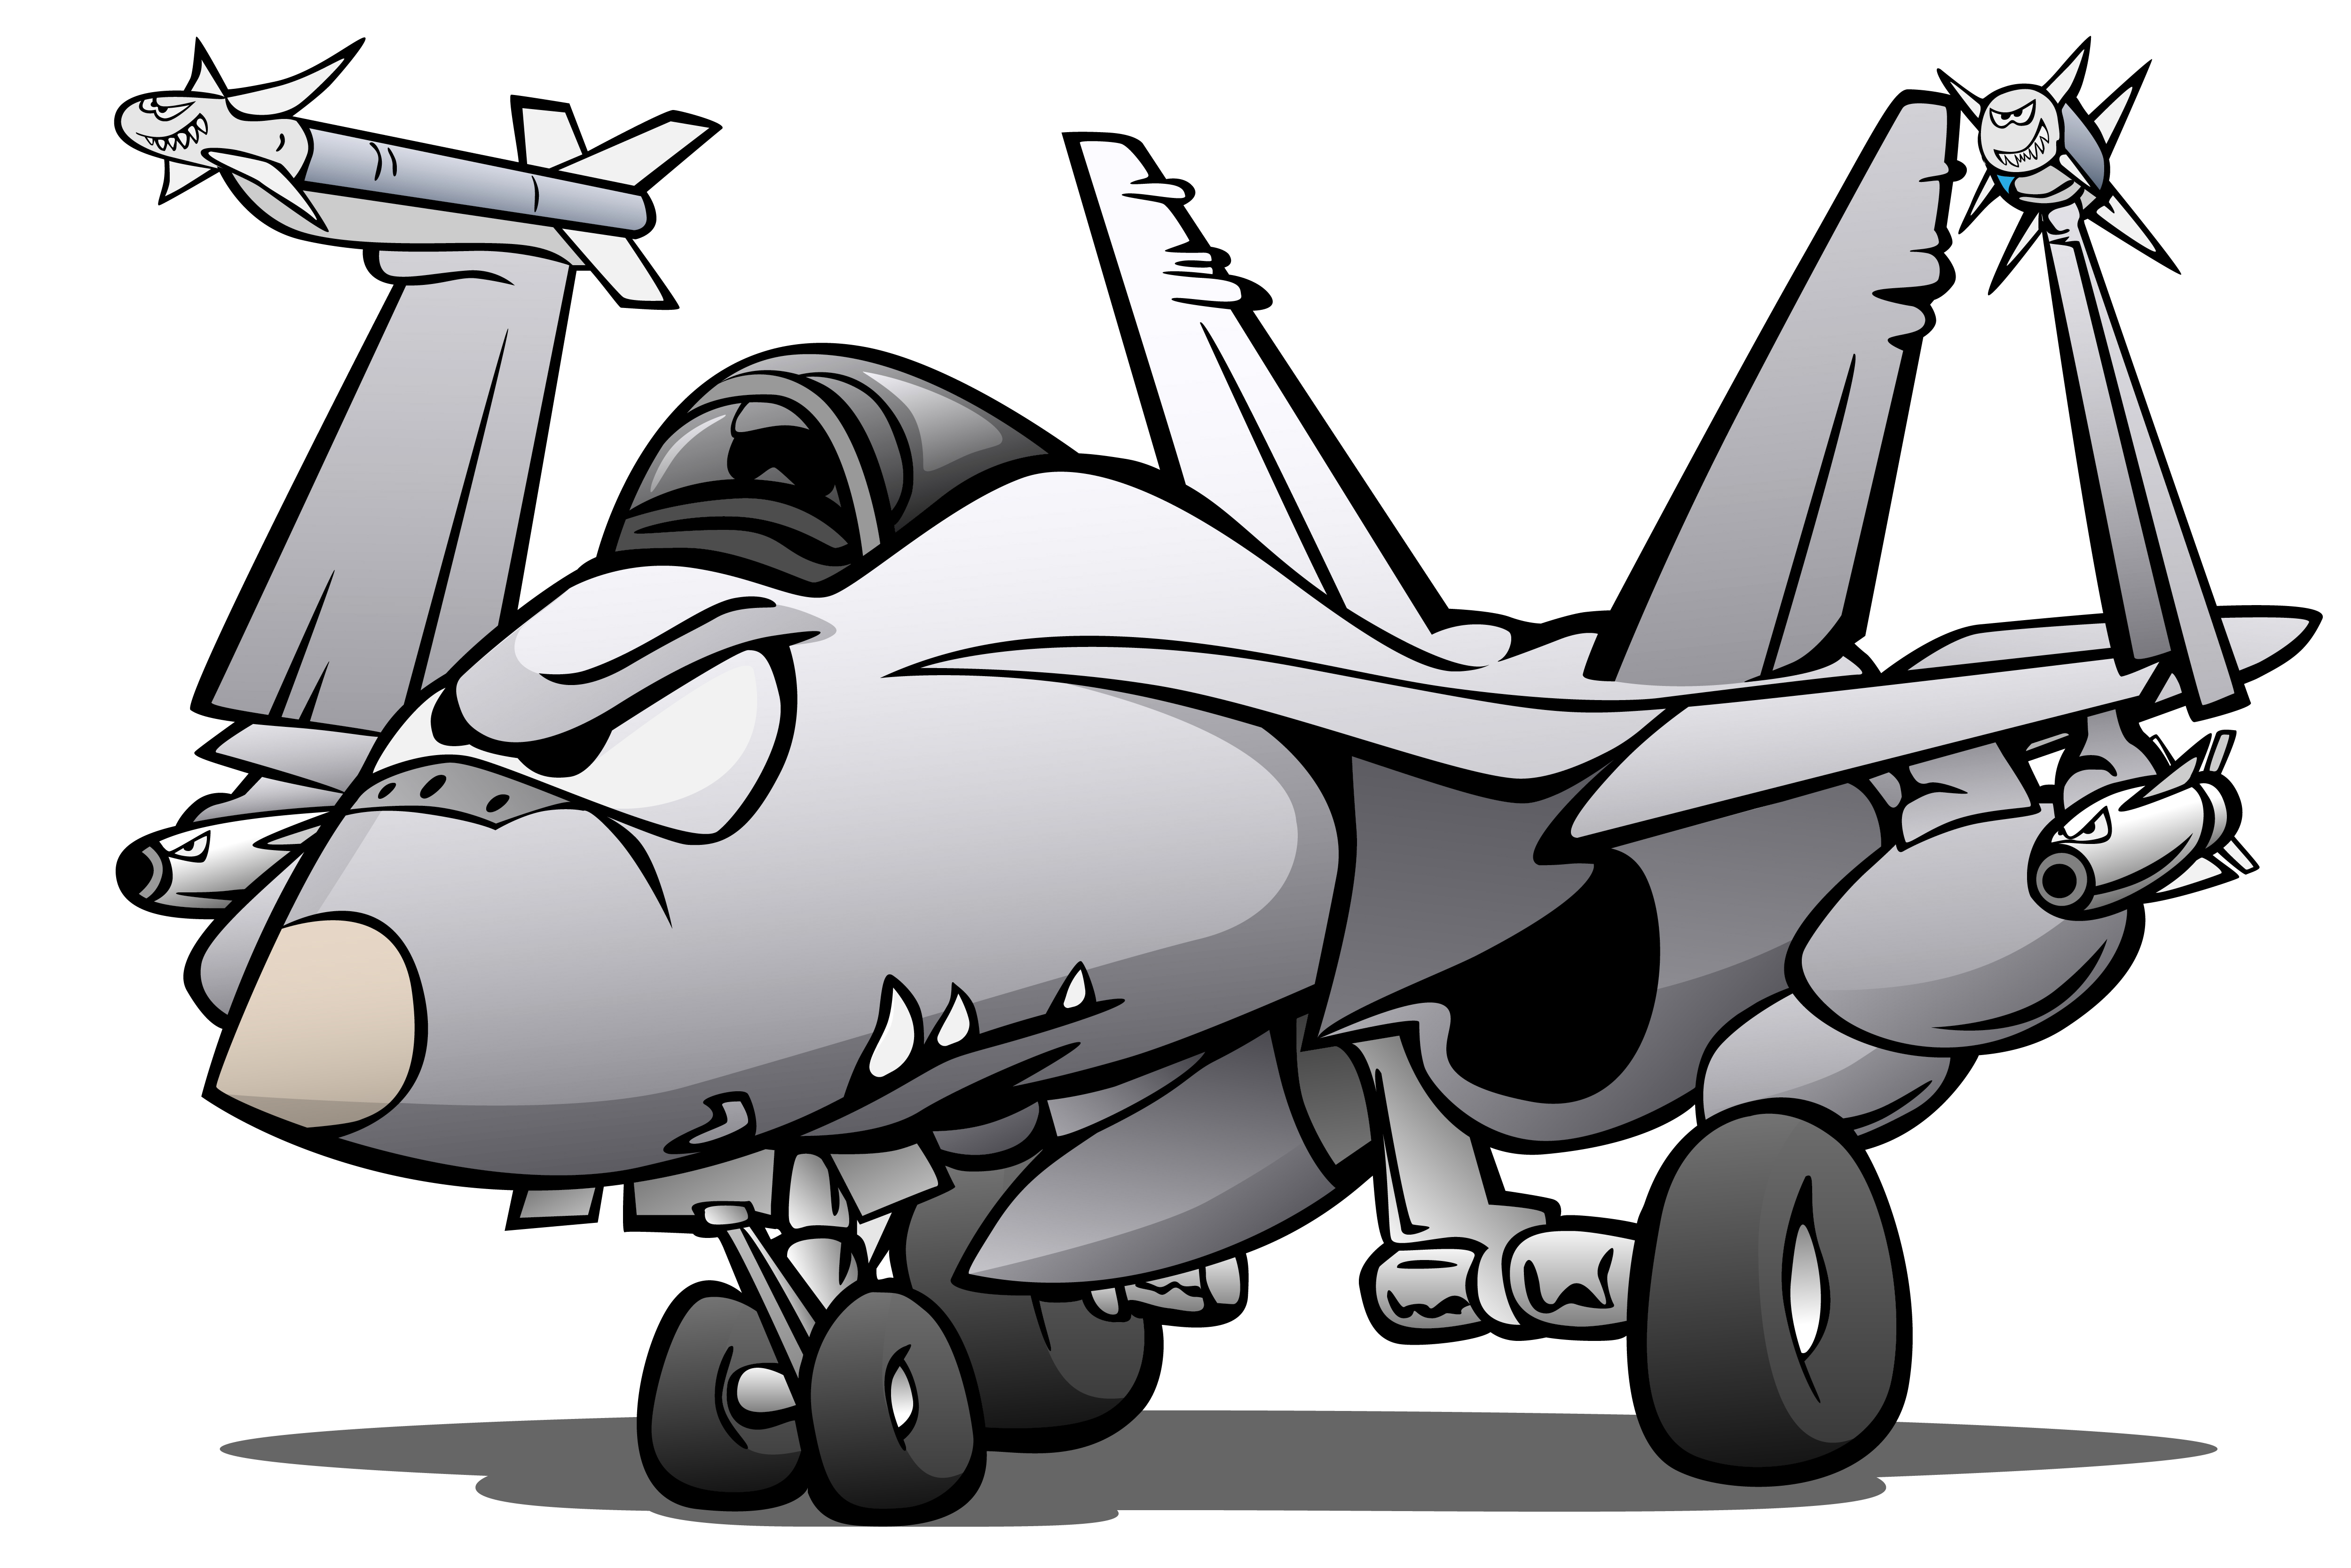 Military Naval Fighter Jet Airplane Cartoon Vector Illustration 372891 Vector Art At Vecteezy